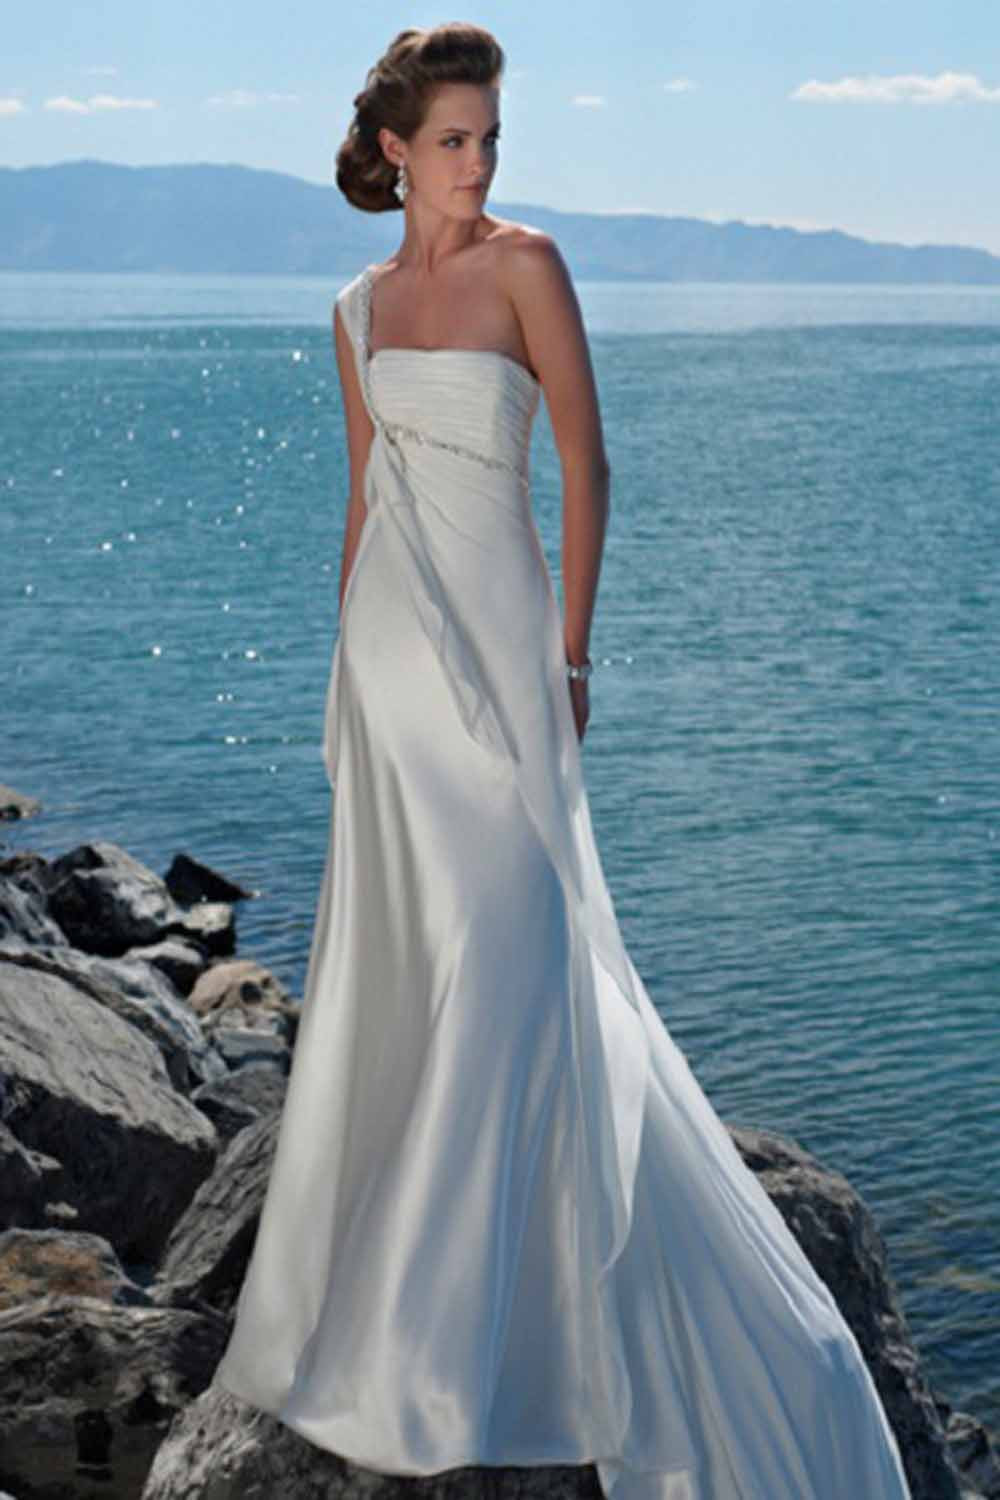 Dress For Beach Wedding
 Different Styles of Beach Wedding Dresses